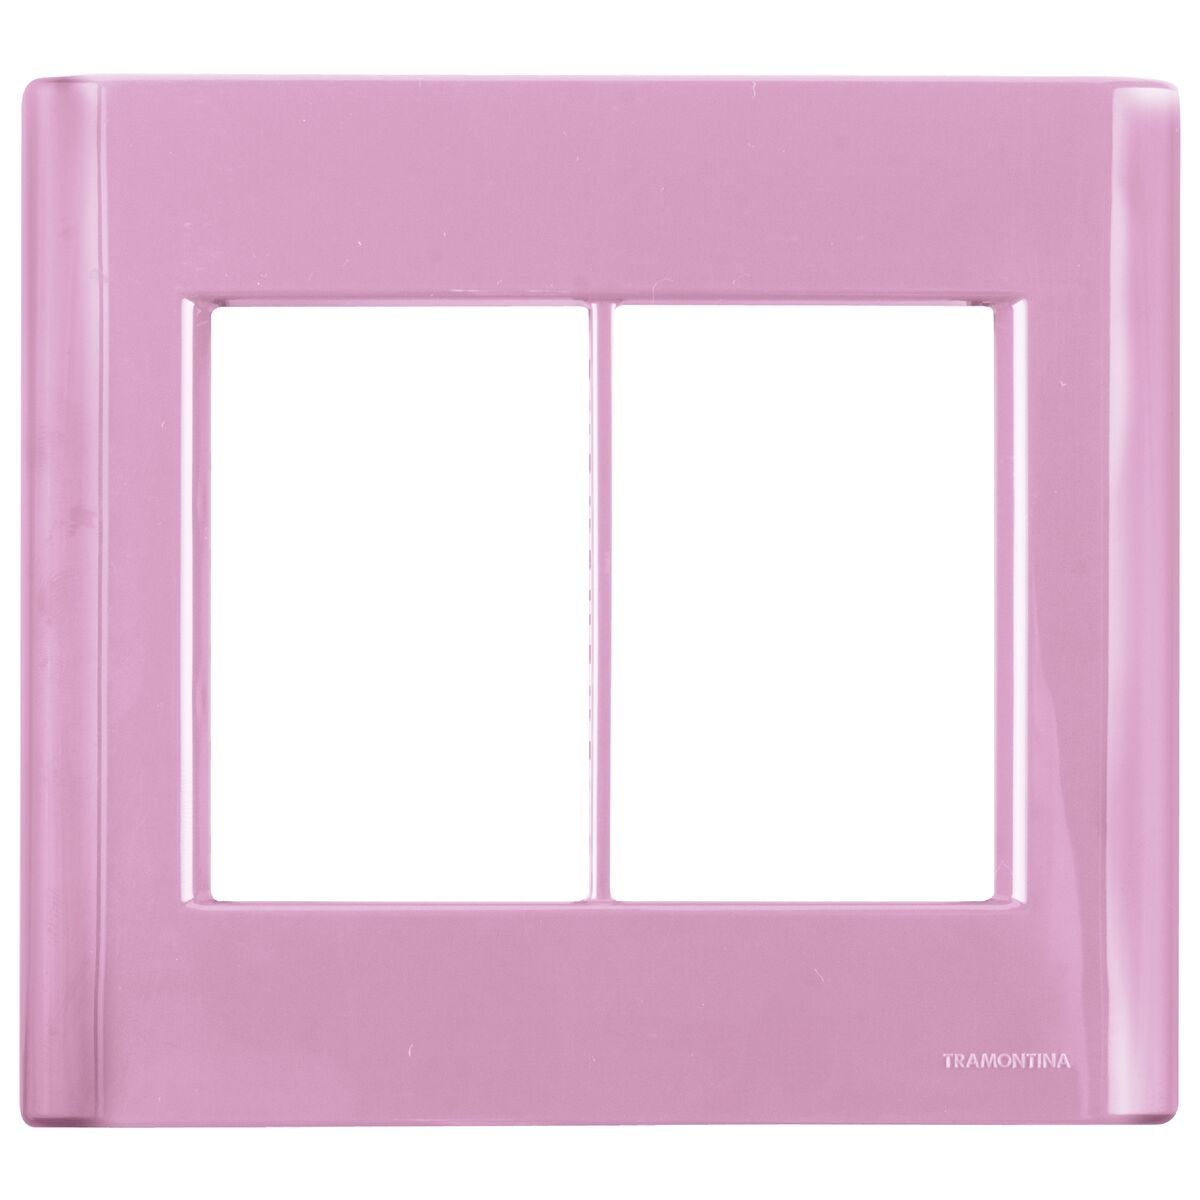 Tramontina Giz pink 6-gang wall plate, 4x4